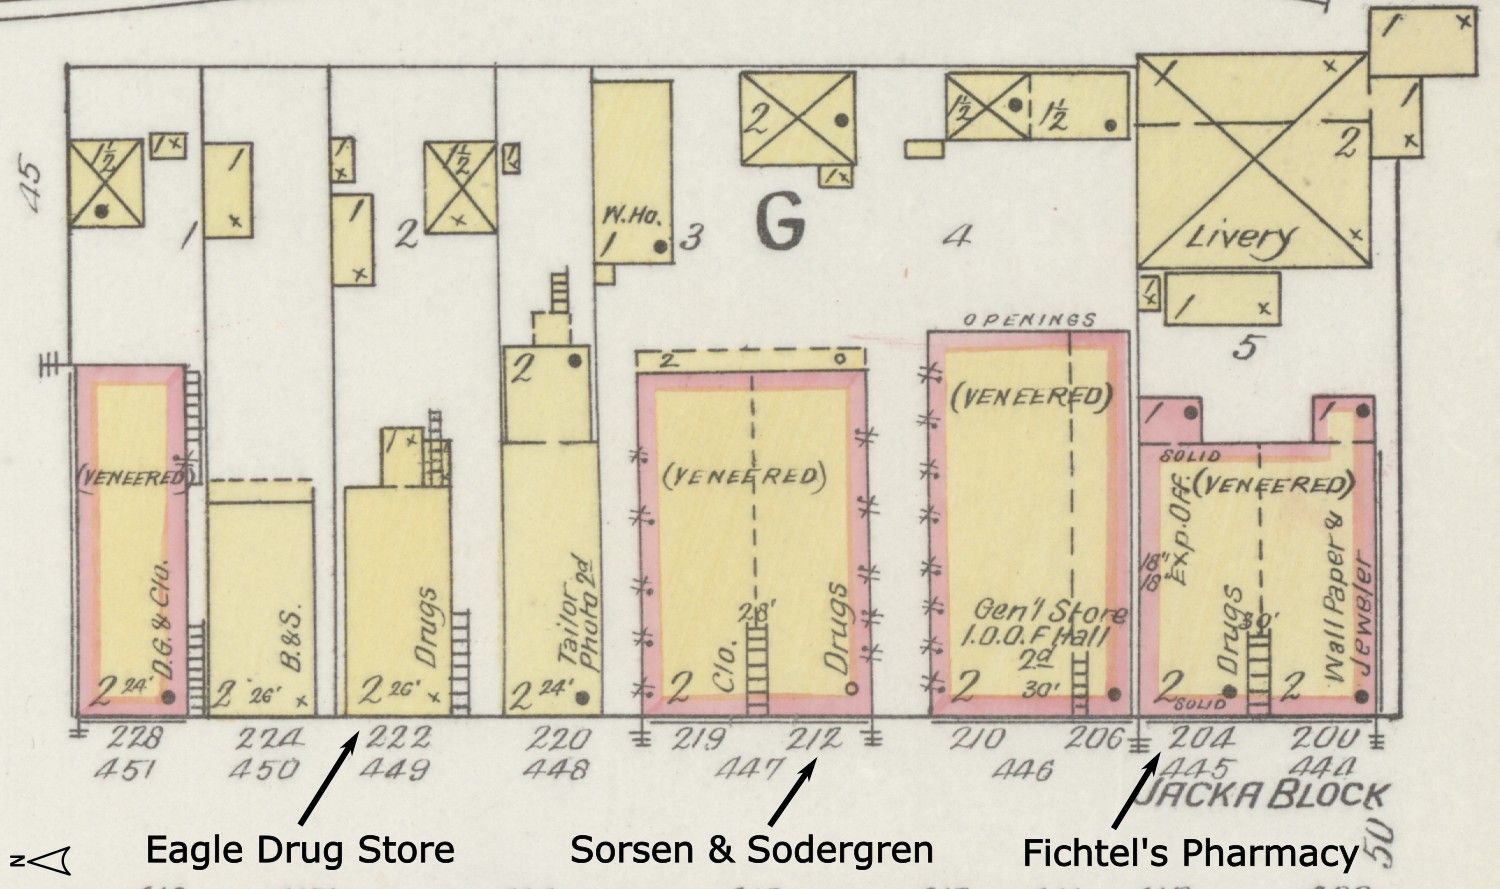 Sanborn map, North 5th St., Red Jacket - Sept 1893